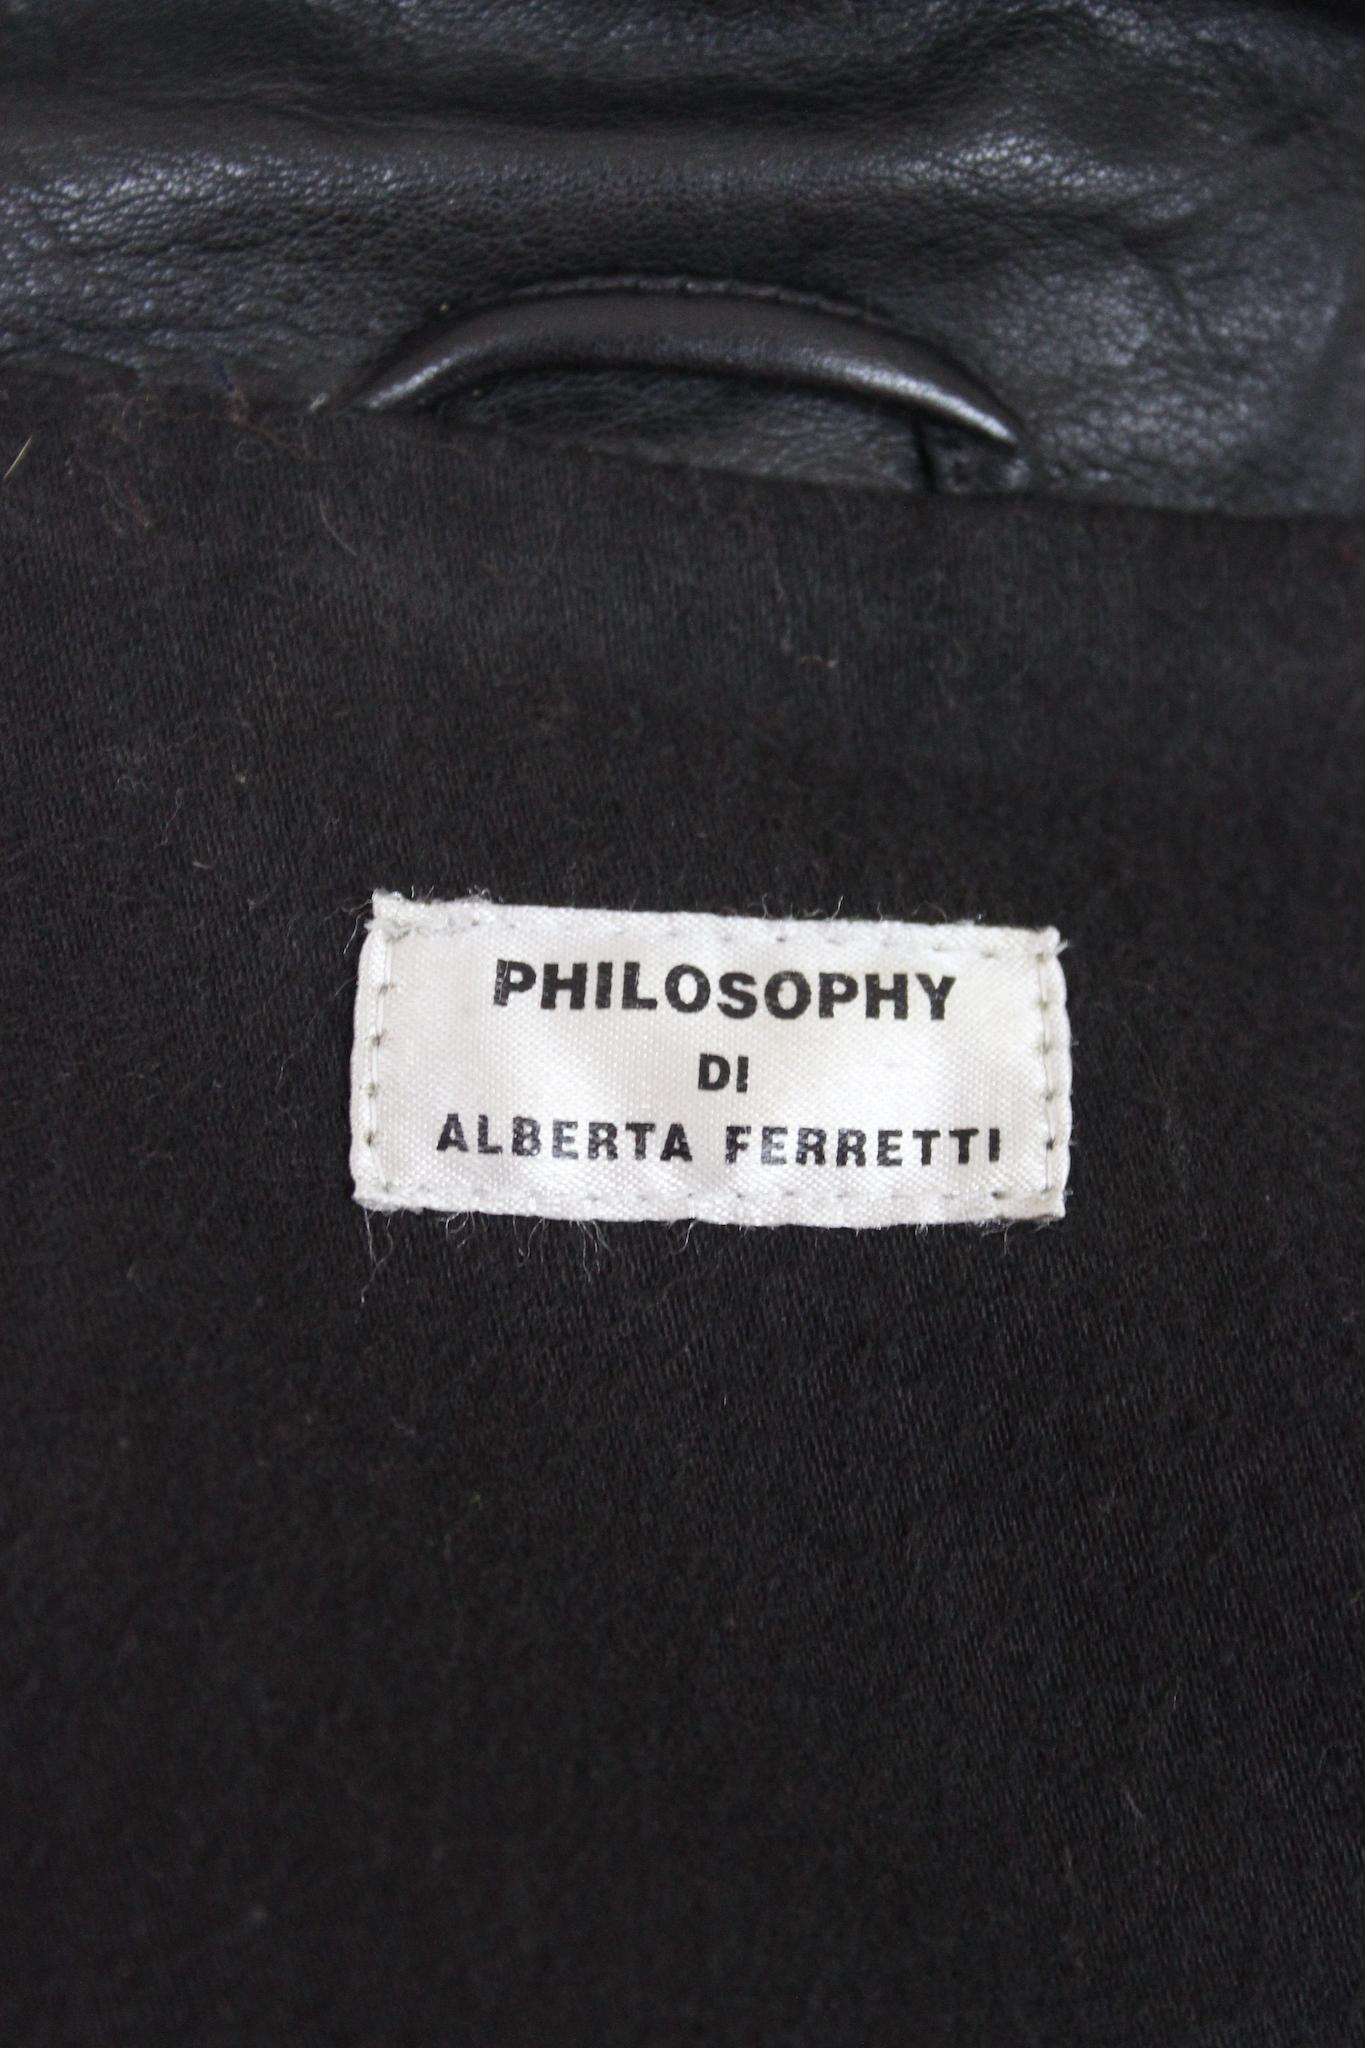 Alberta Ferretti Black Leather Vintage Chiodo Jacket '90s For Sale 2